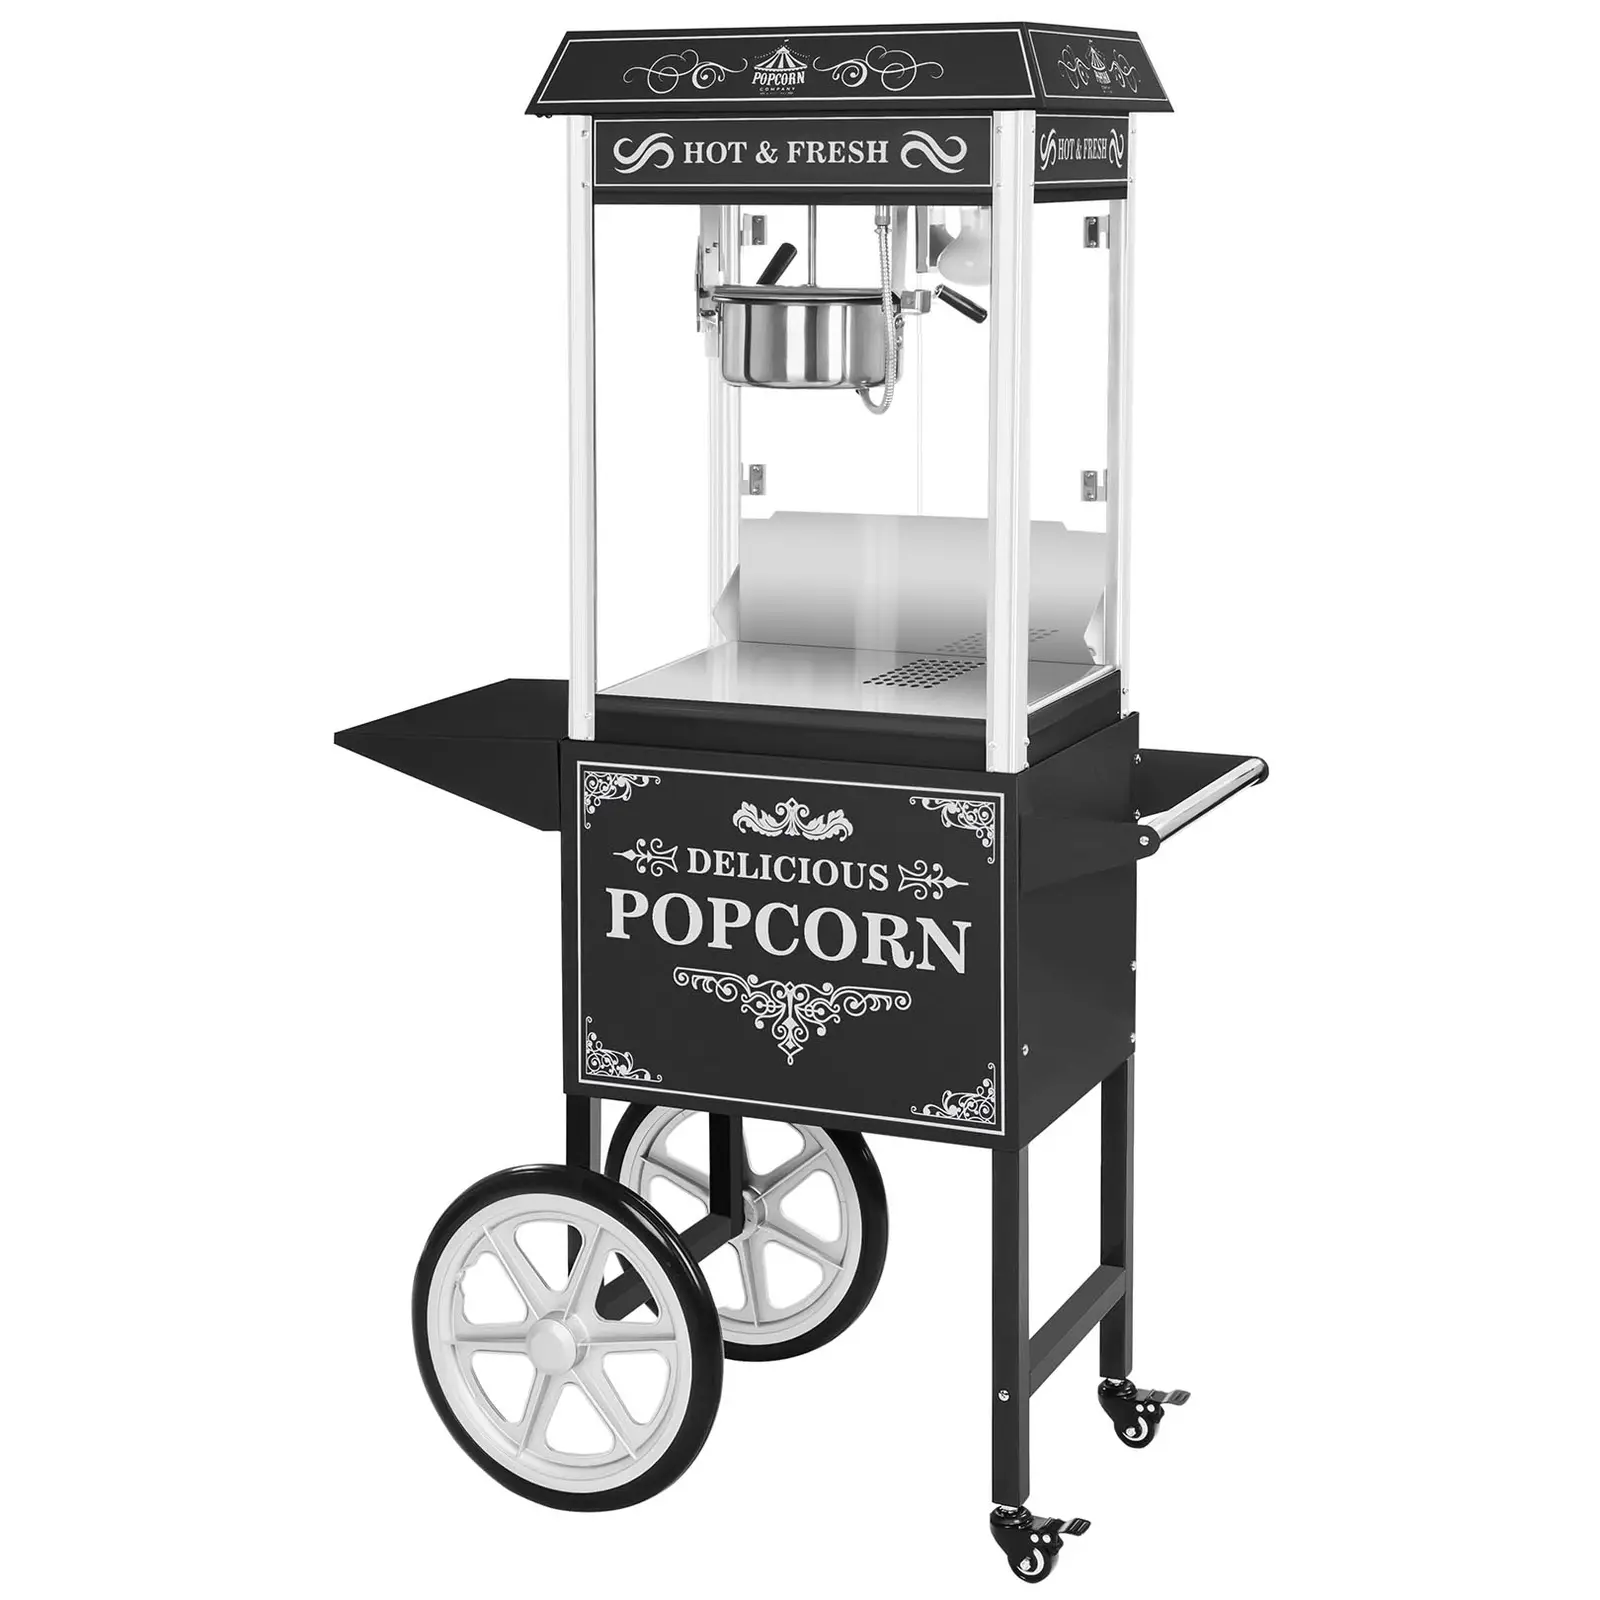 Popcornmaskin med vagn - Retrodesign - Svart